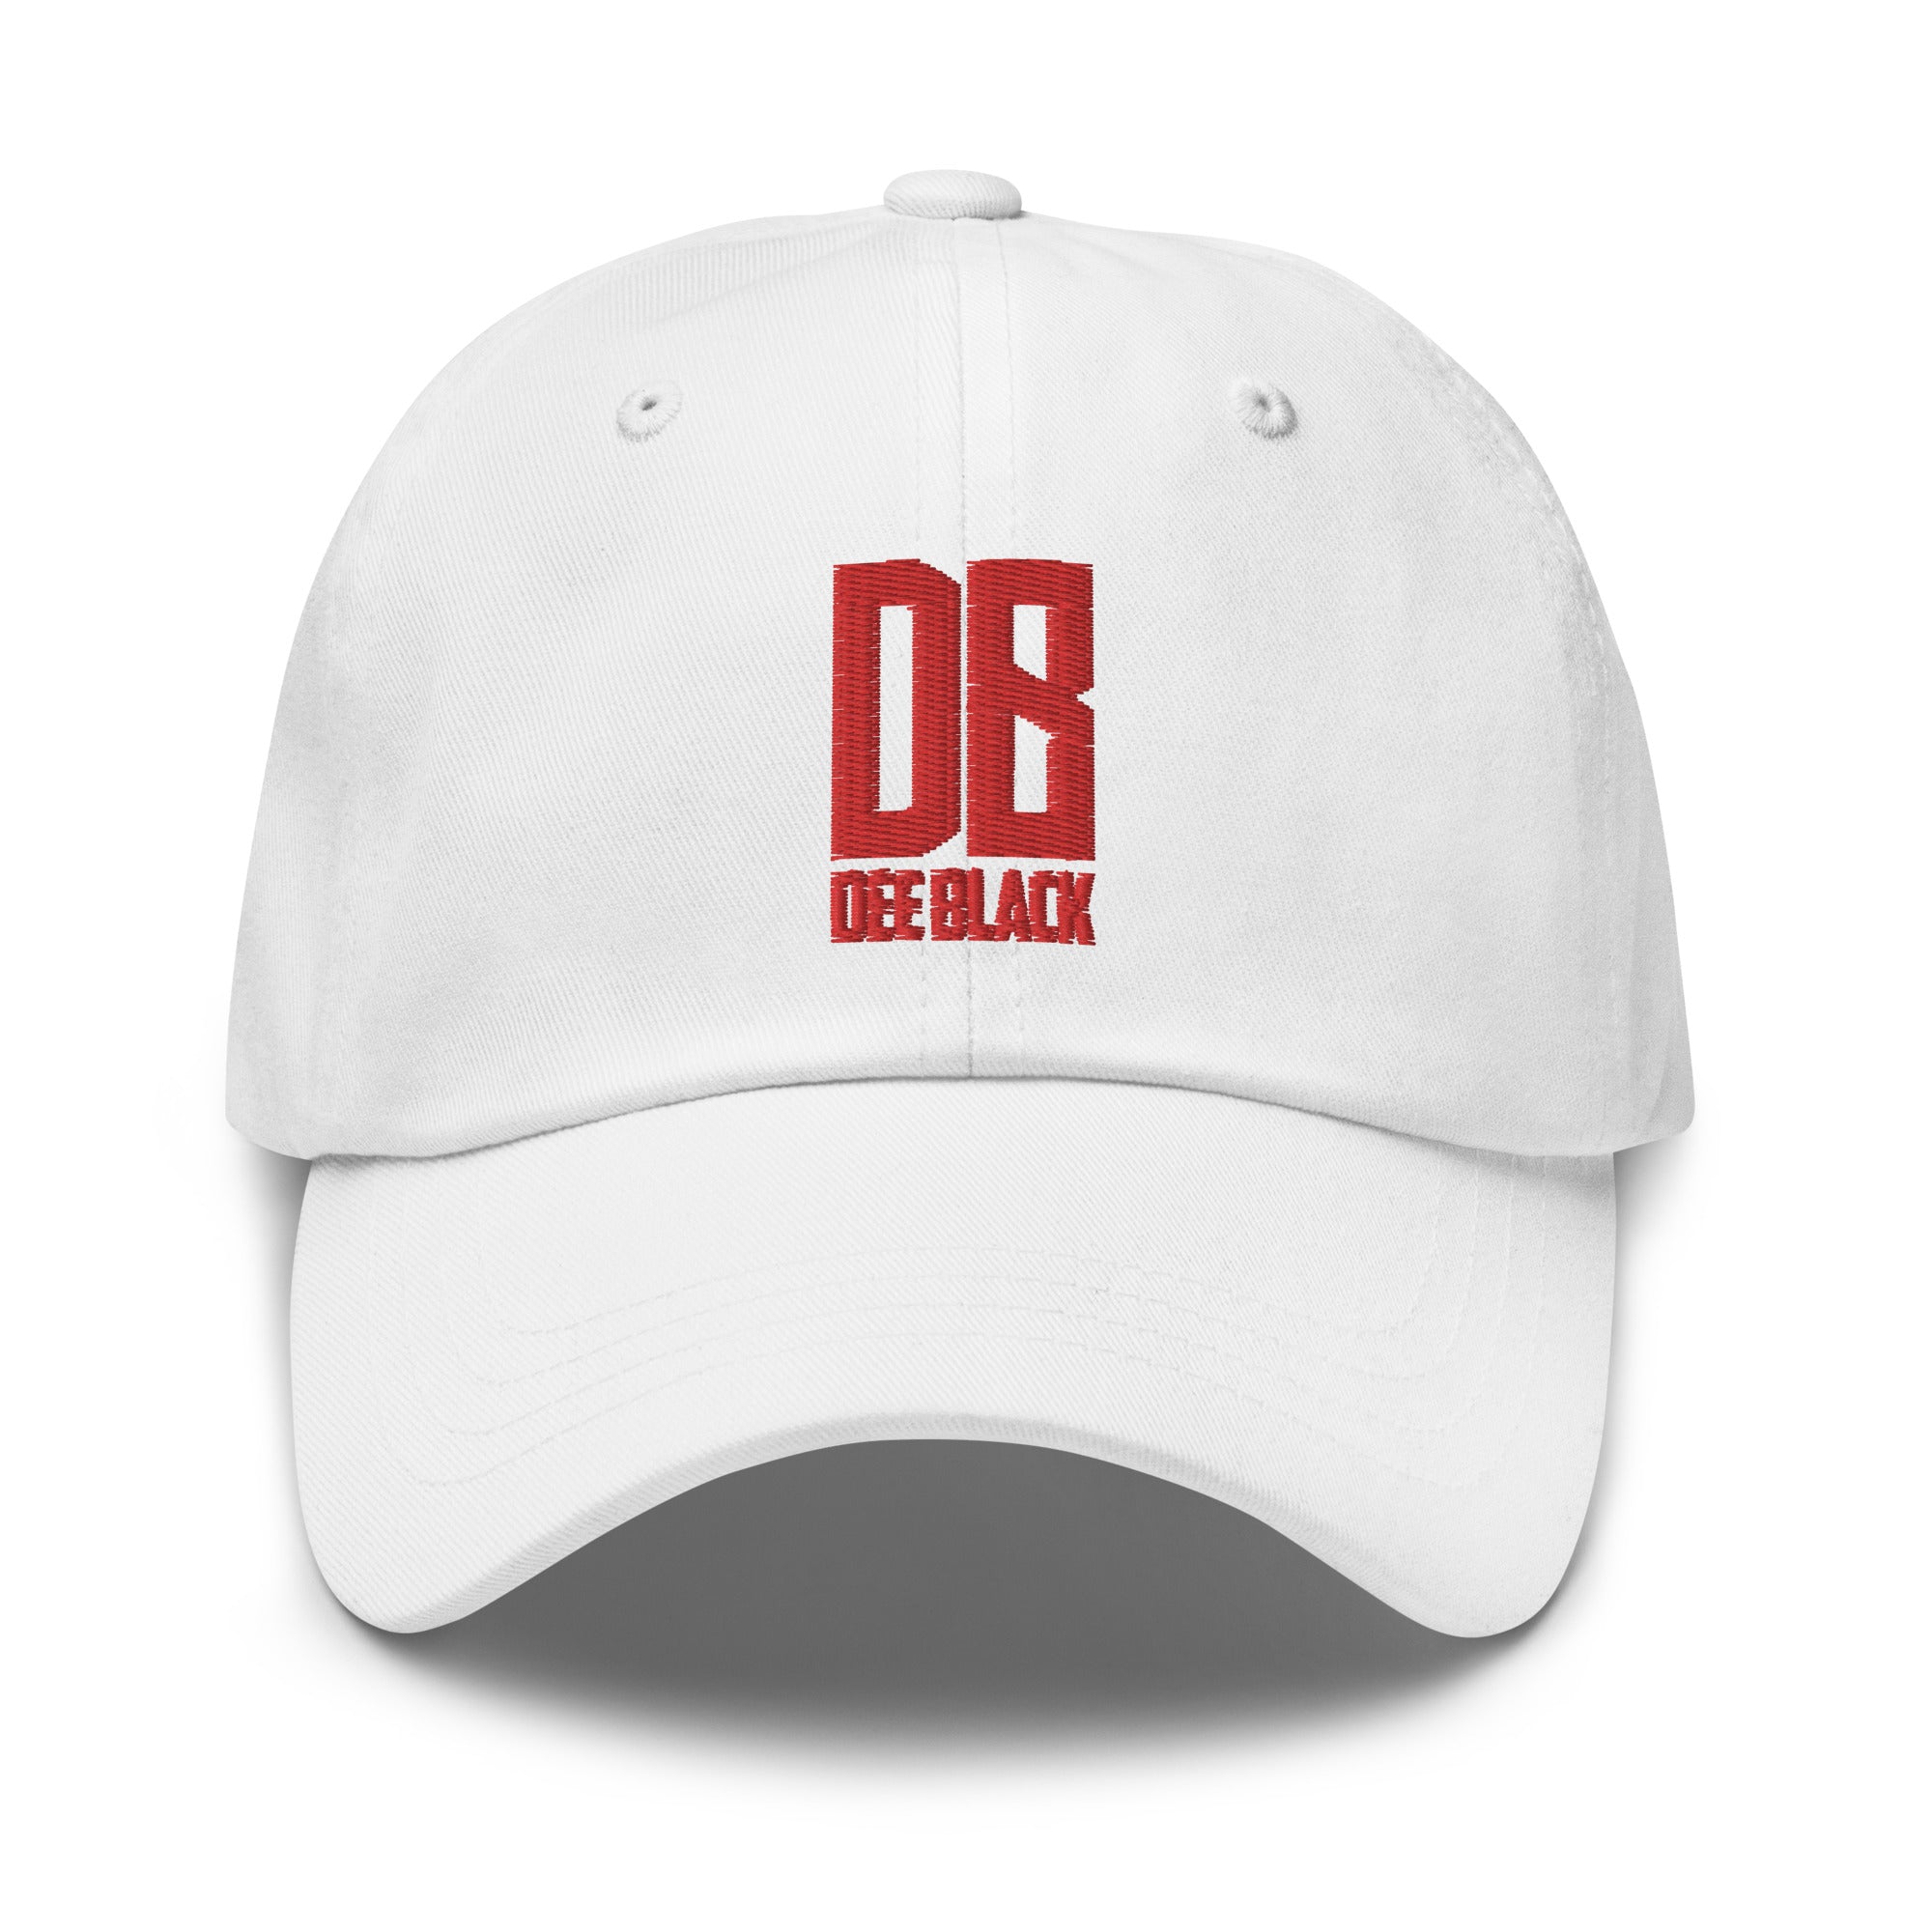 Dee Black - Dad hat